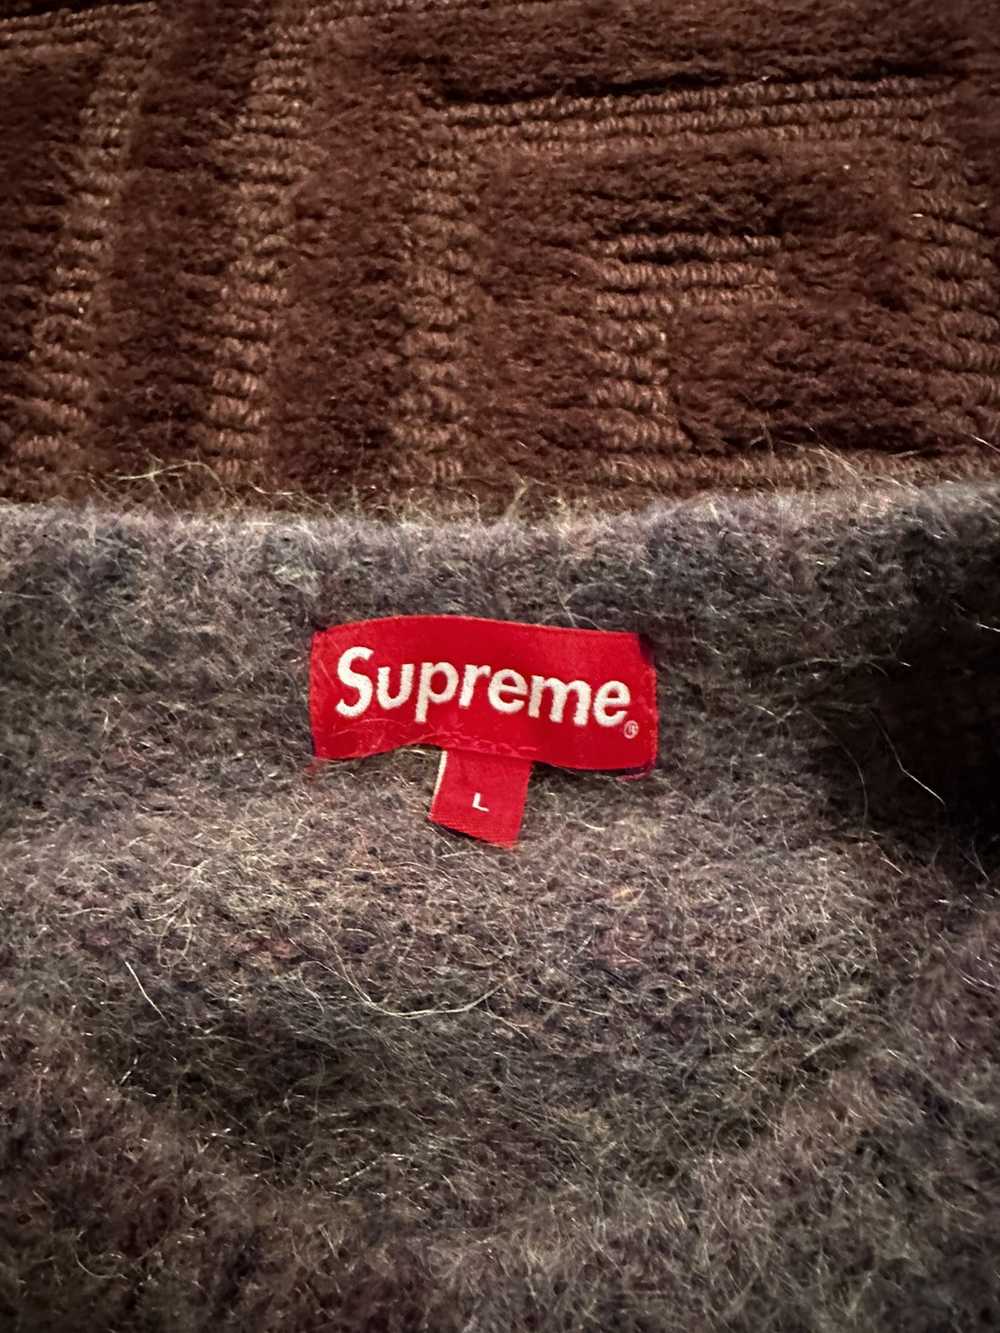 Supreme Supreme Knit - image 3